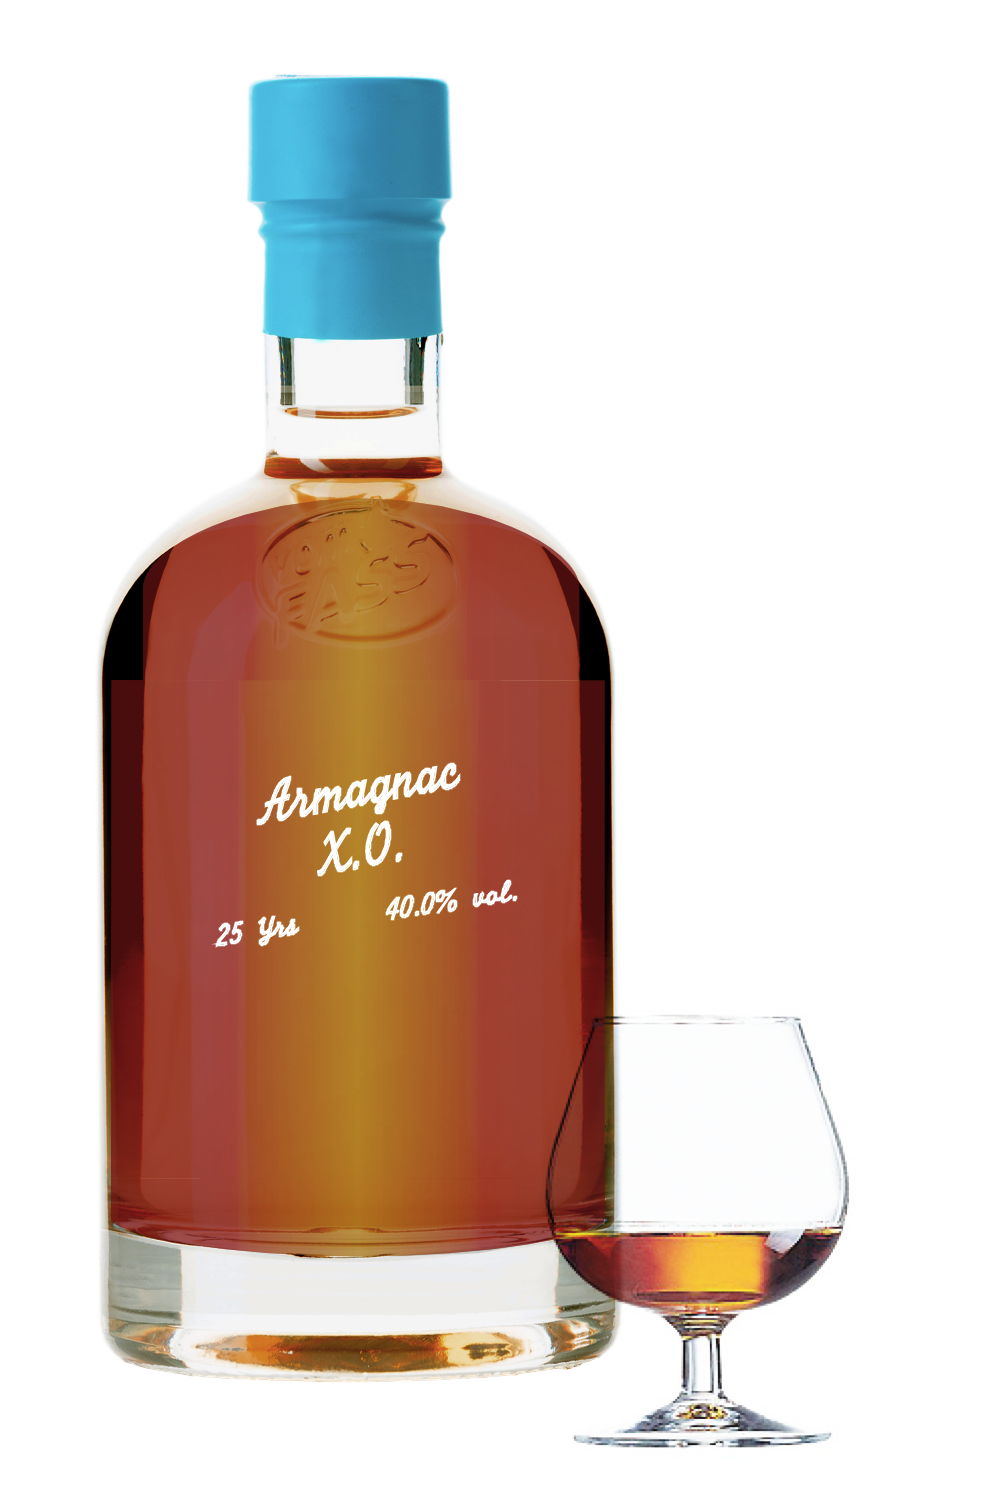 Armagnac X.O. 40 % alc. 25 years old